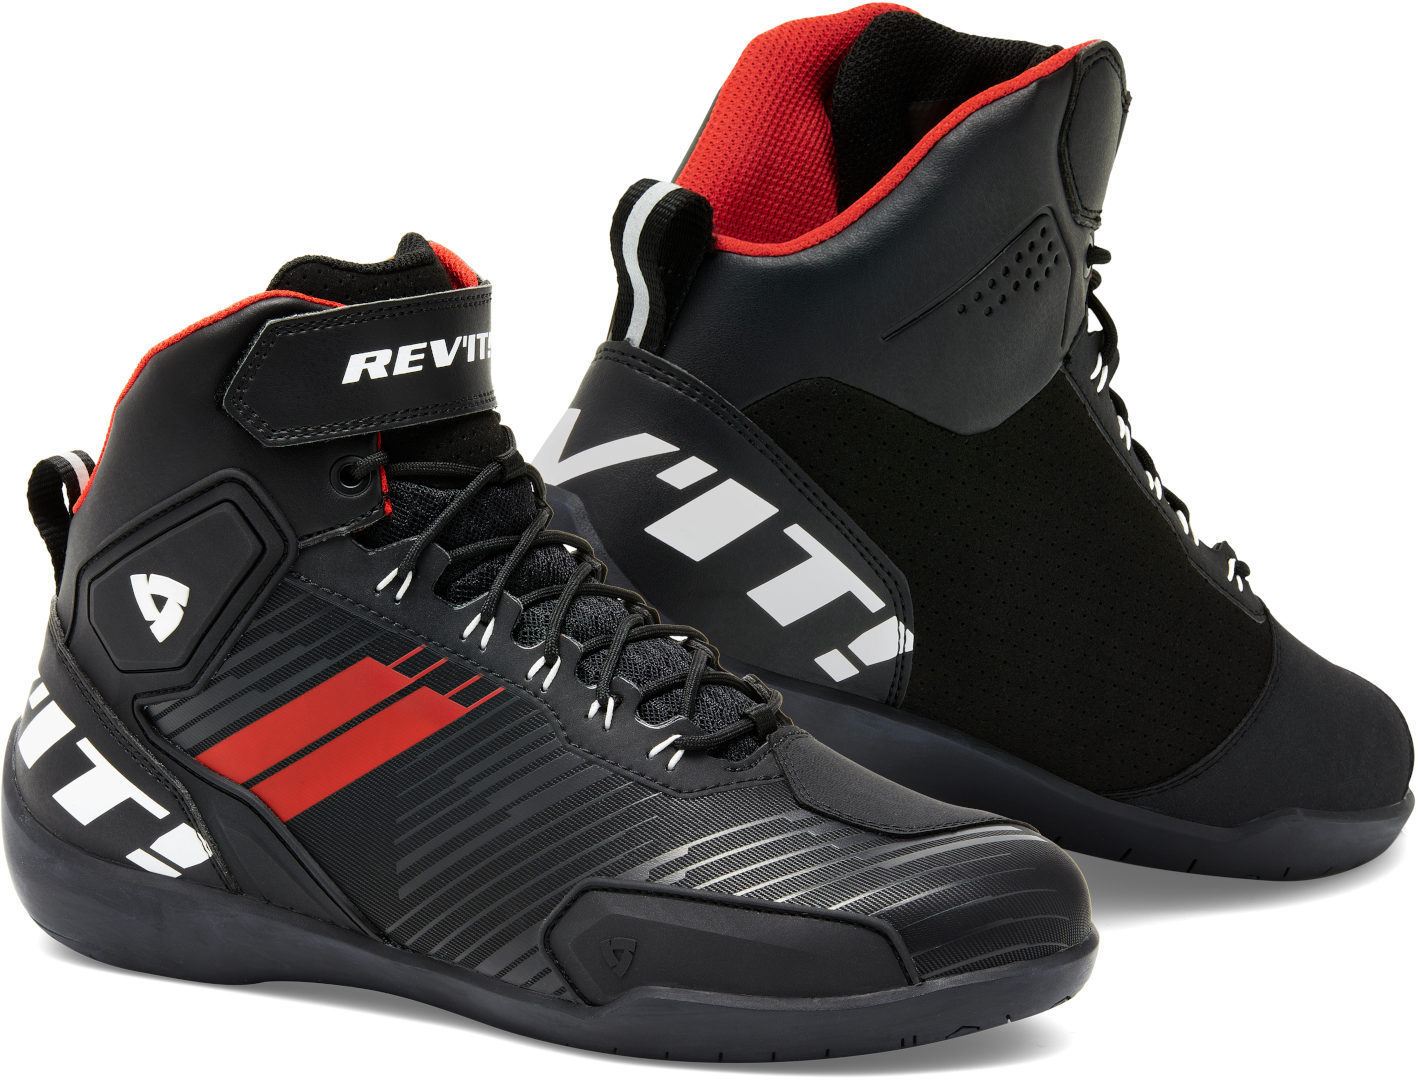 Revit G-Force Motorradschuhe, schwarz-weiss-rot, Größe 46 für Frauen, schwarz-weiss-rot, Größe 46